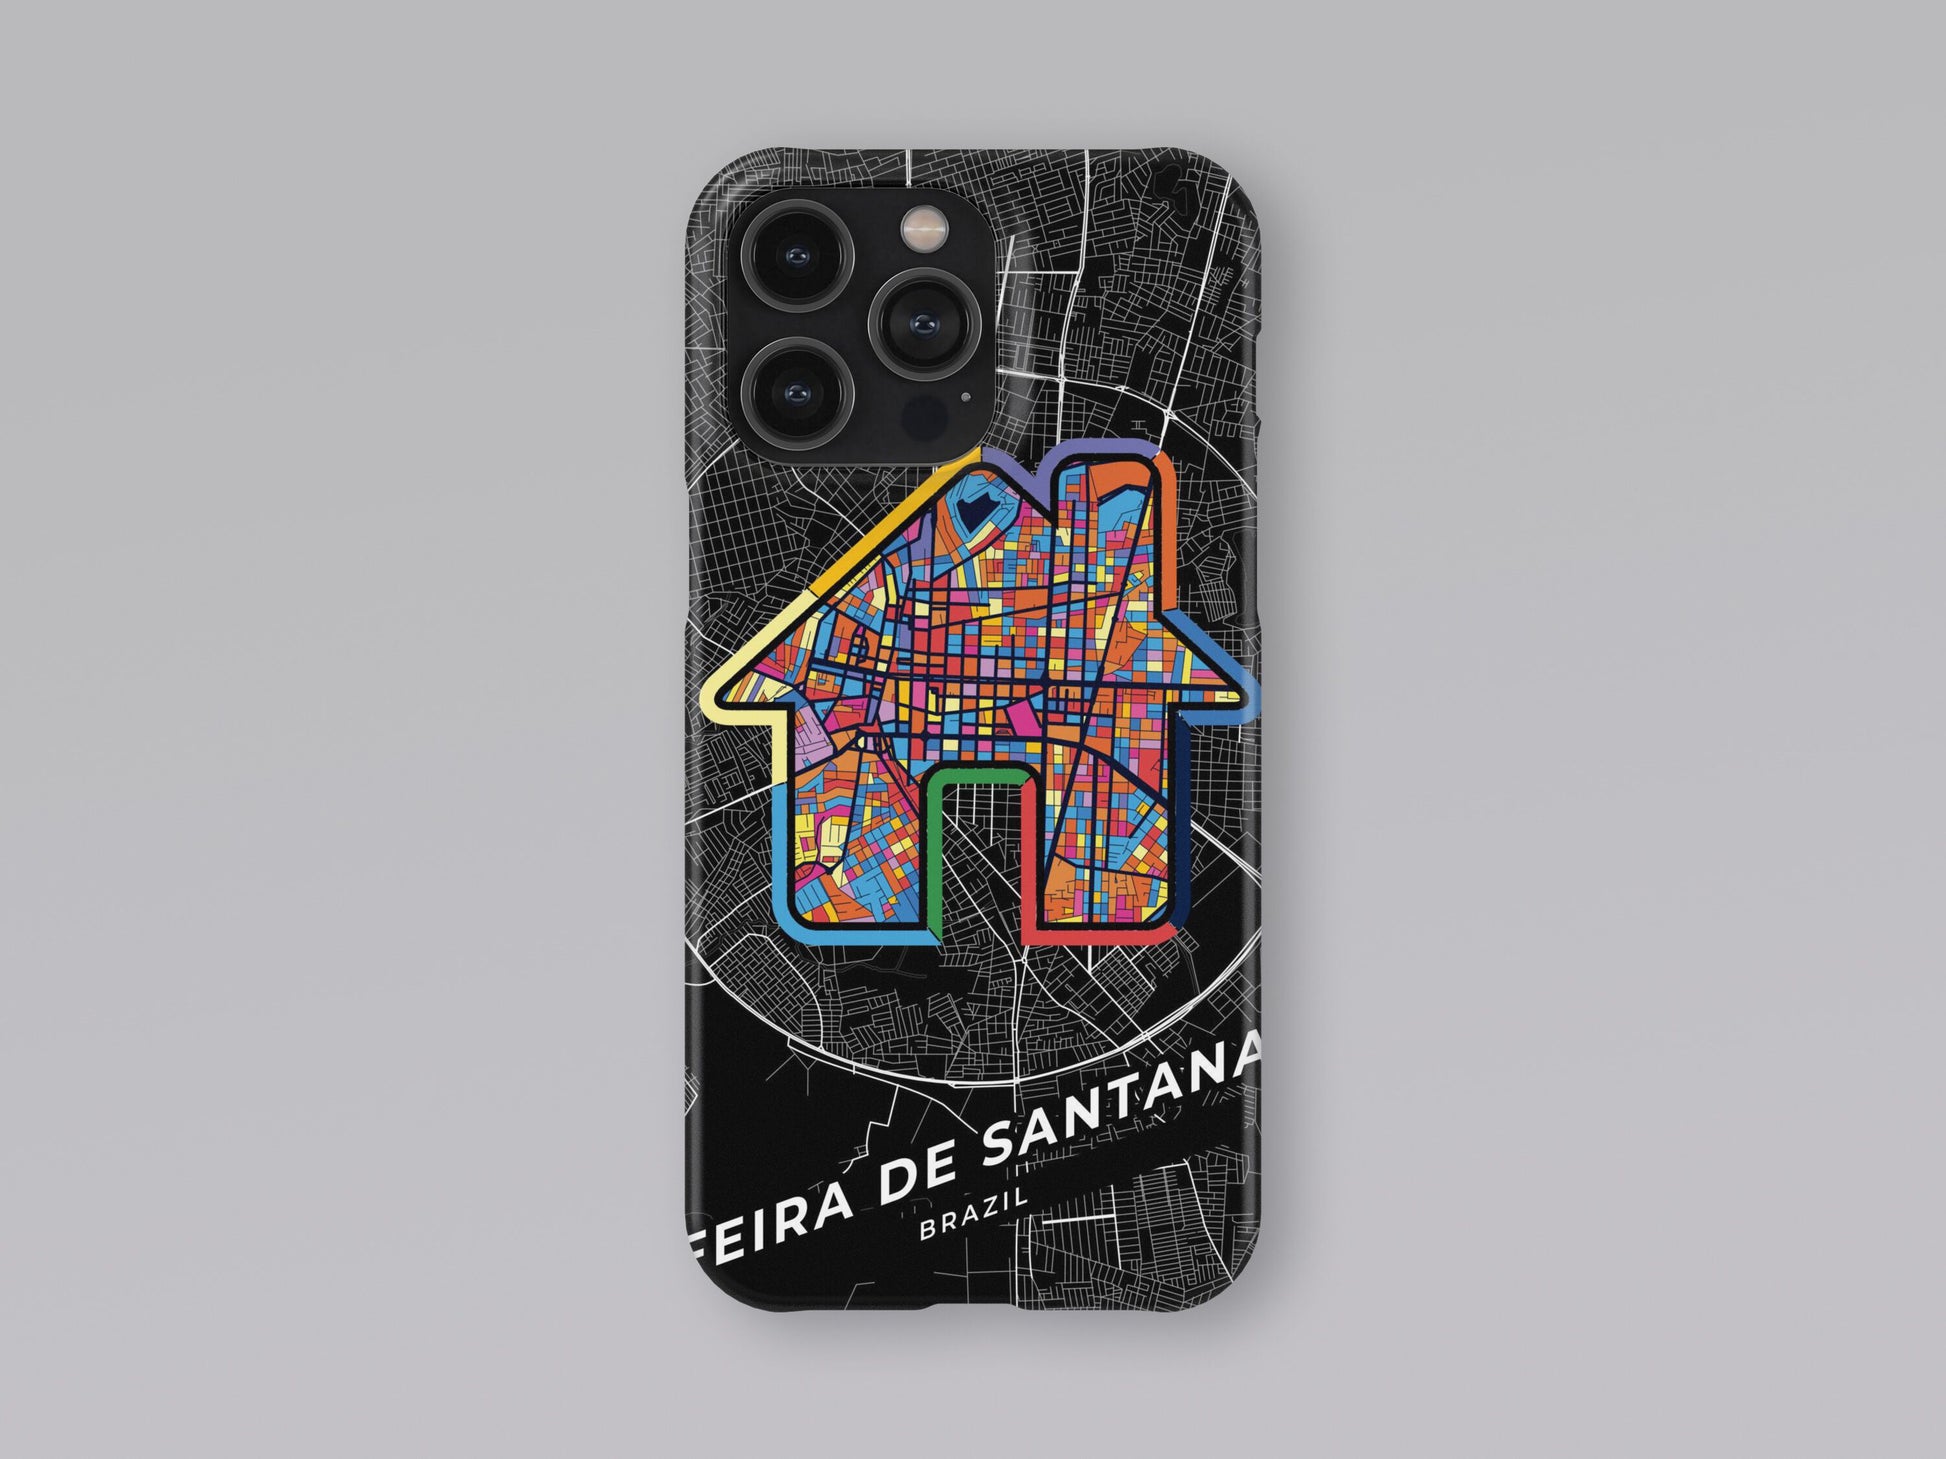 Feira De Santana Brazil slim phone case with colorful icon. Birthday, wedding or housewarming gift. Couple match cases. 3